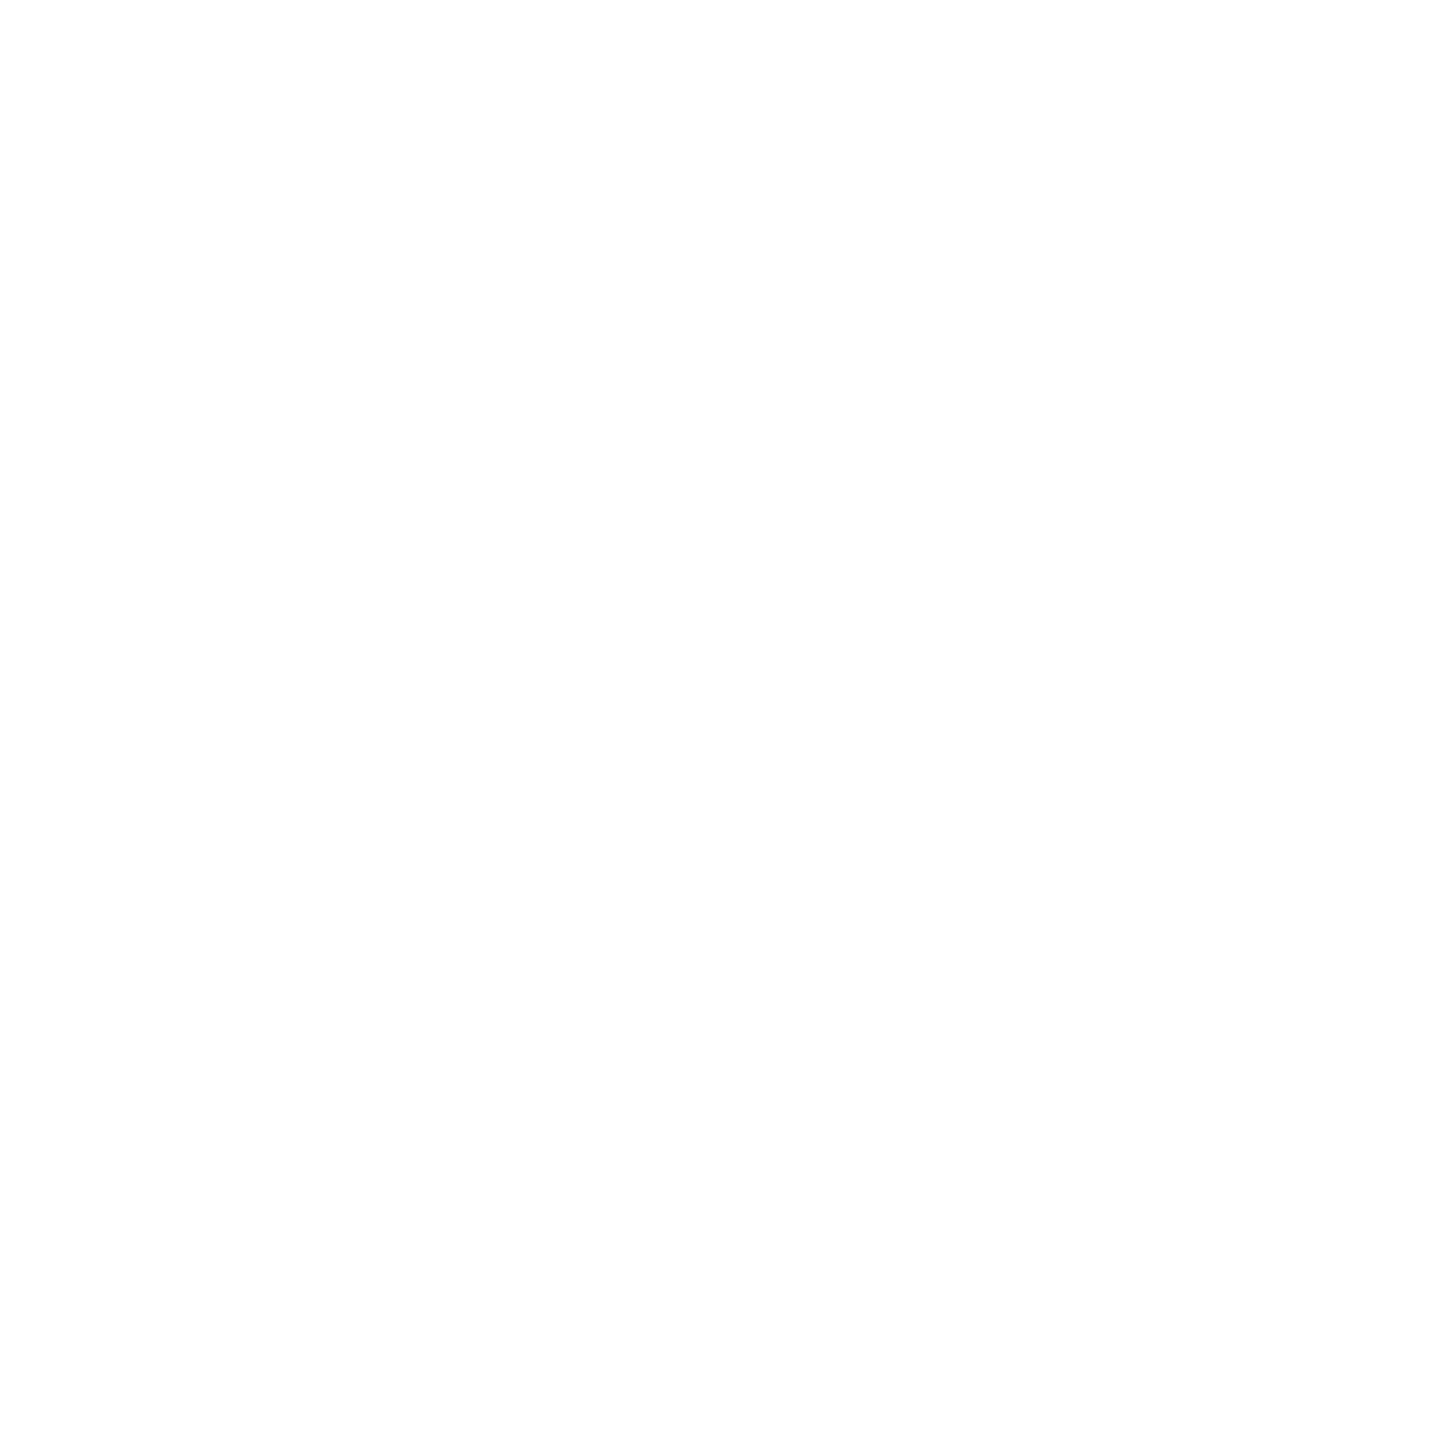 https://www.openphilanthropy.org/wp-content/uploads/Farm-Animal-Welfare-KO-1-1440x1440.png